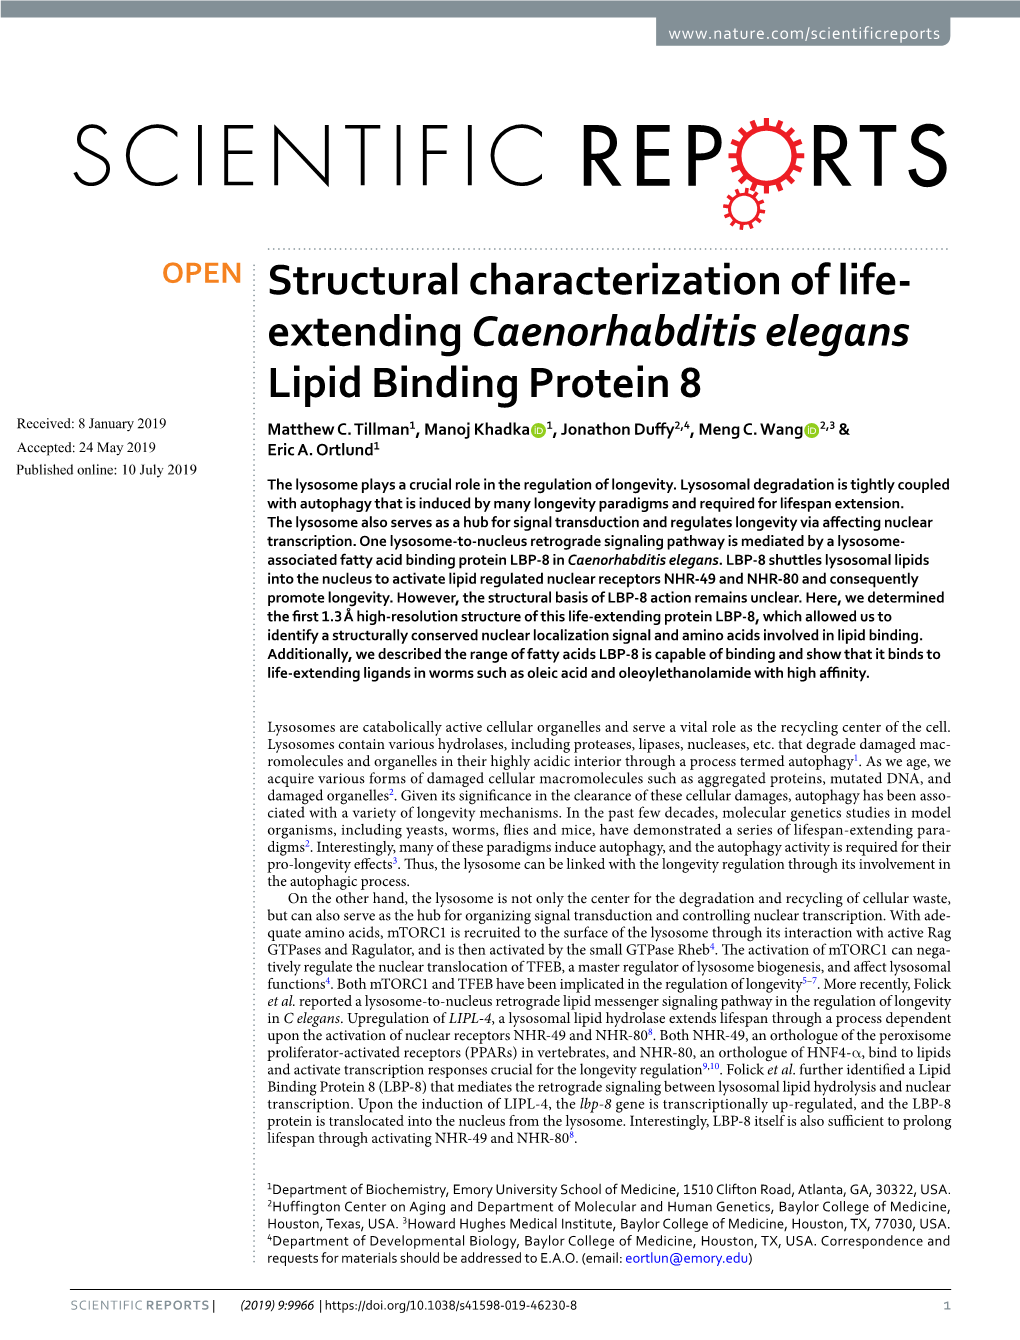 Extending Caenorhabditis Elegans Lipid Binding Protein 8 Received: 8 January 2019 Matthew C